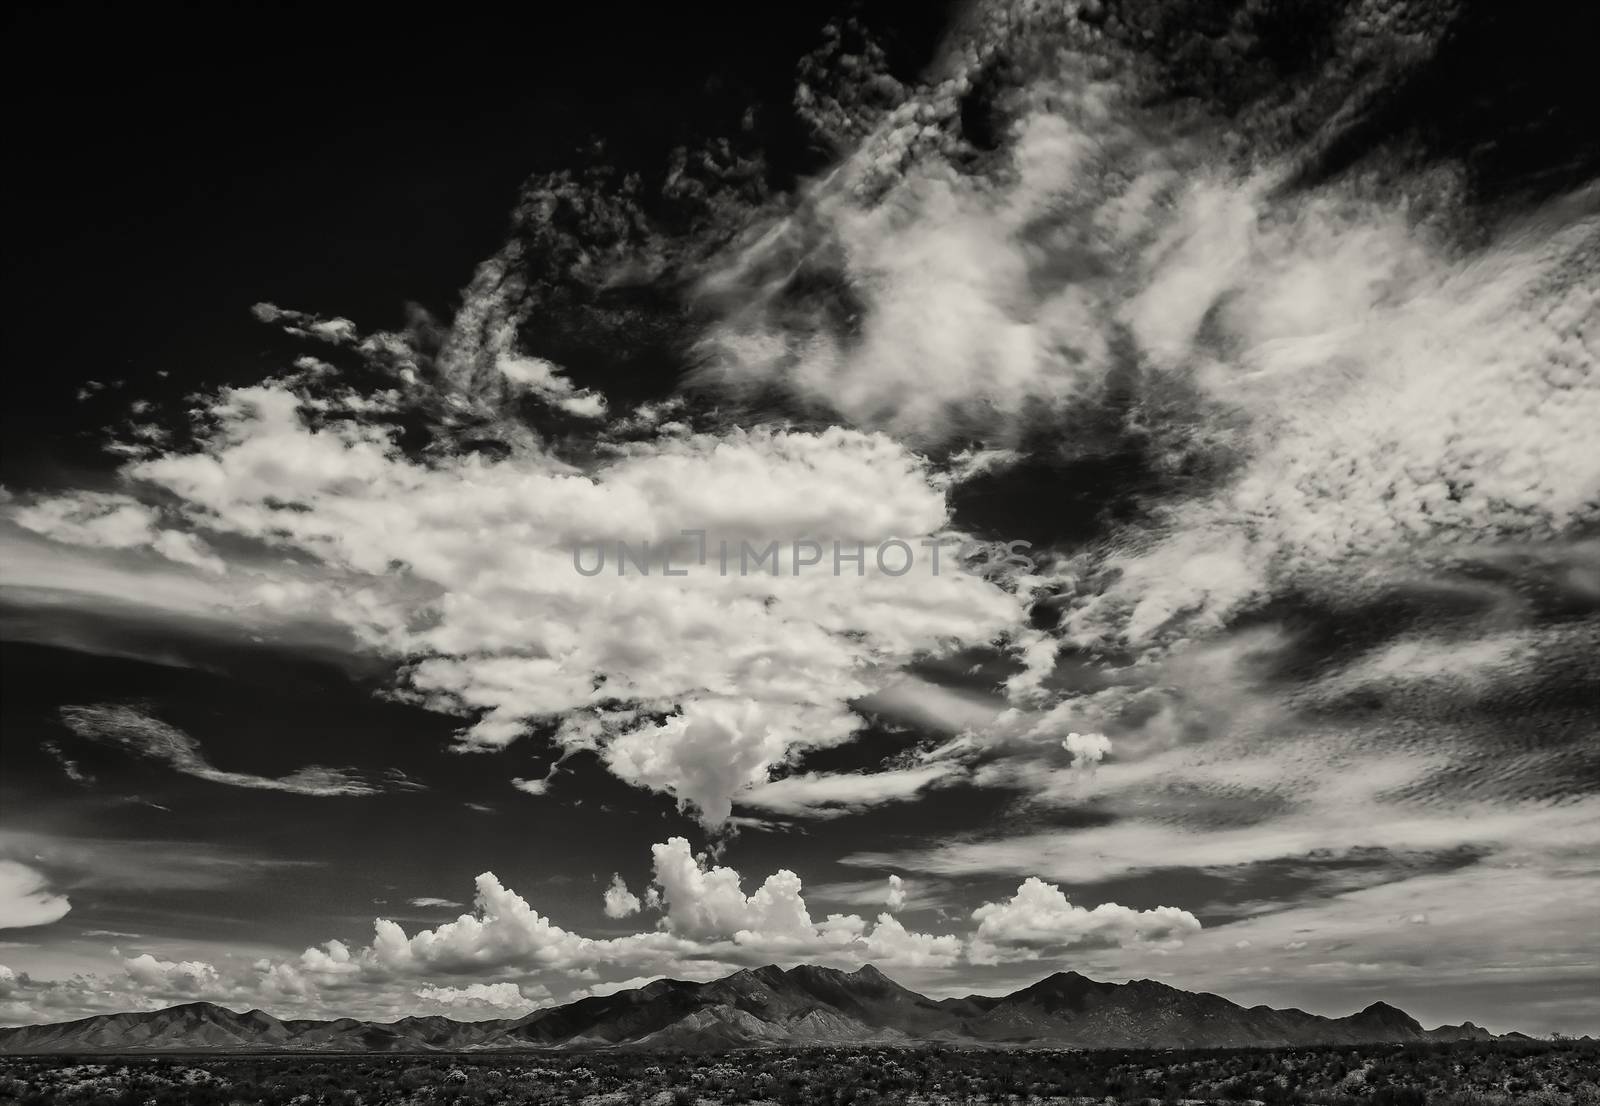 Monsoon Clouds in Arizona, USA by Creatista